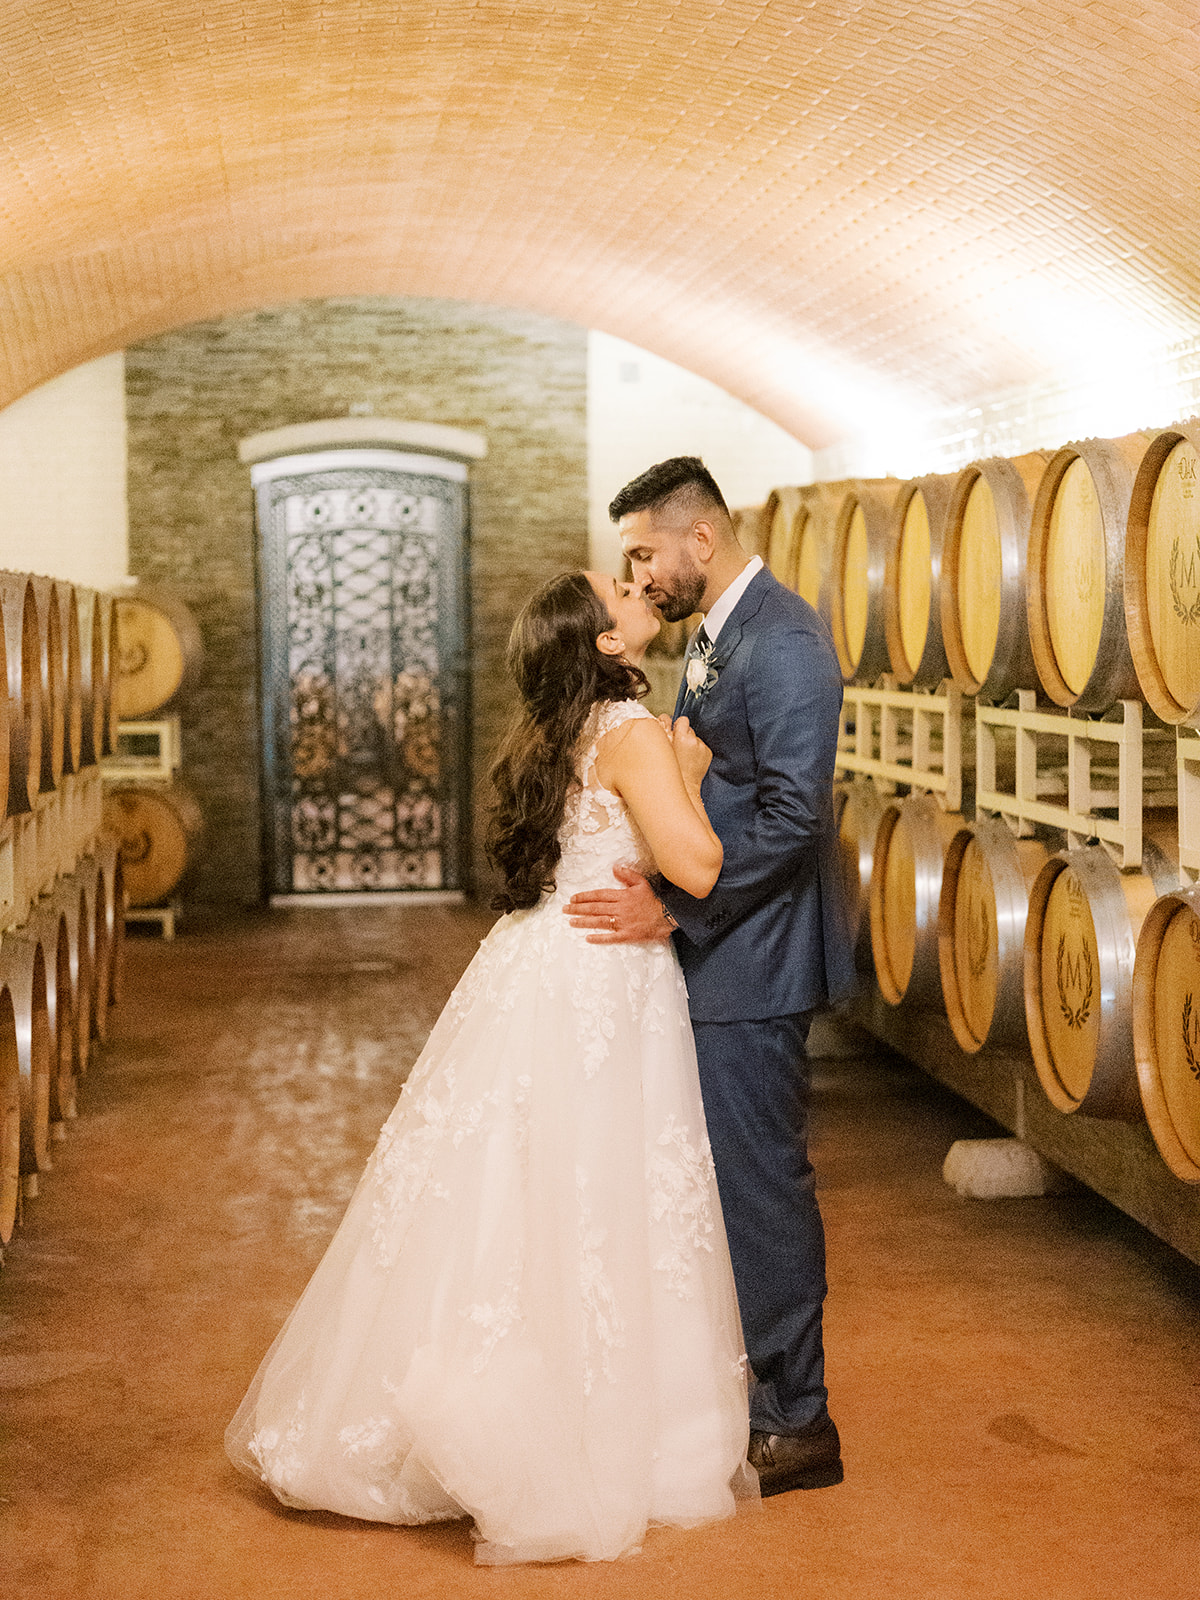 morais vineyard winery virginia bealeton wedding barrels of wine wine cellar pictures intimate photos bride and groom